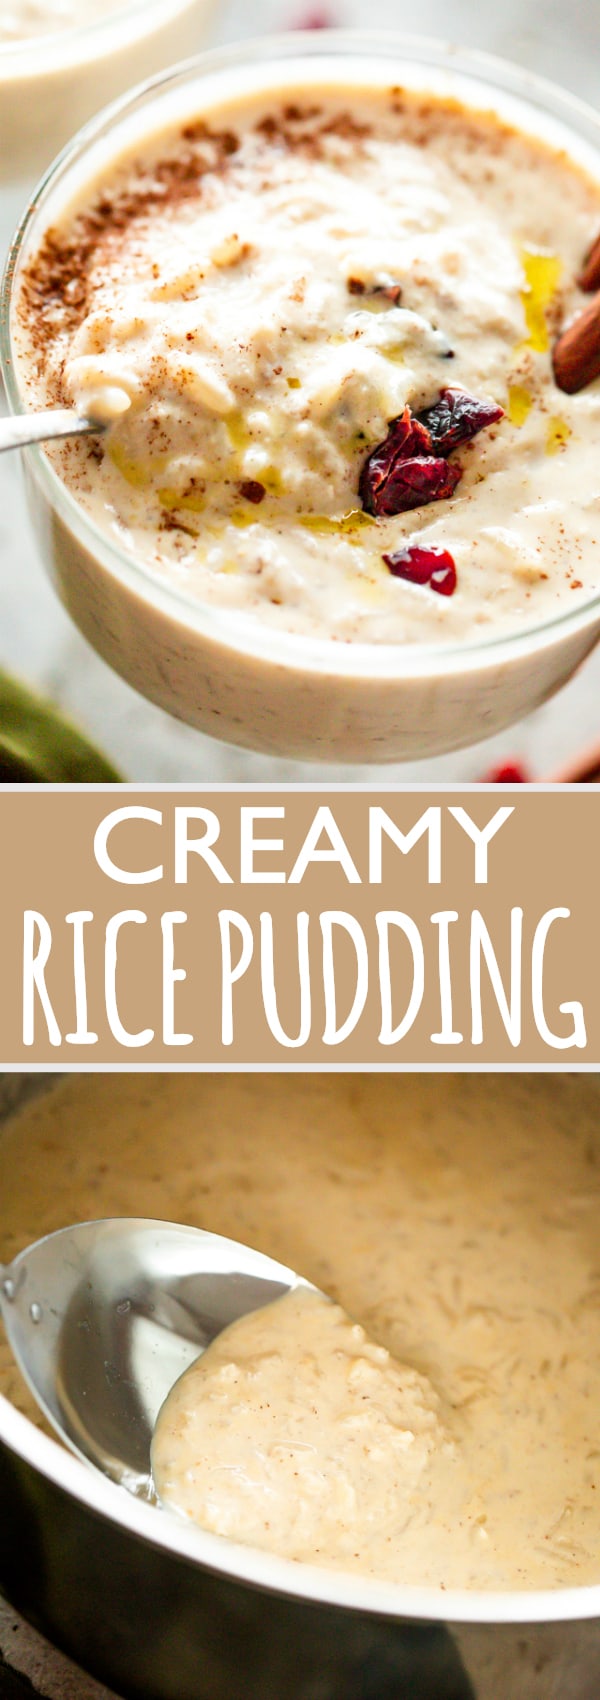 Creamy Rice Pudding Recipe | Diethood